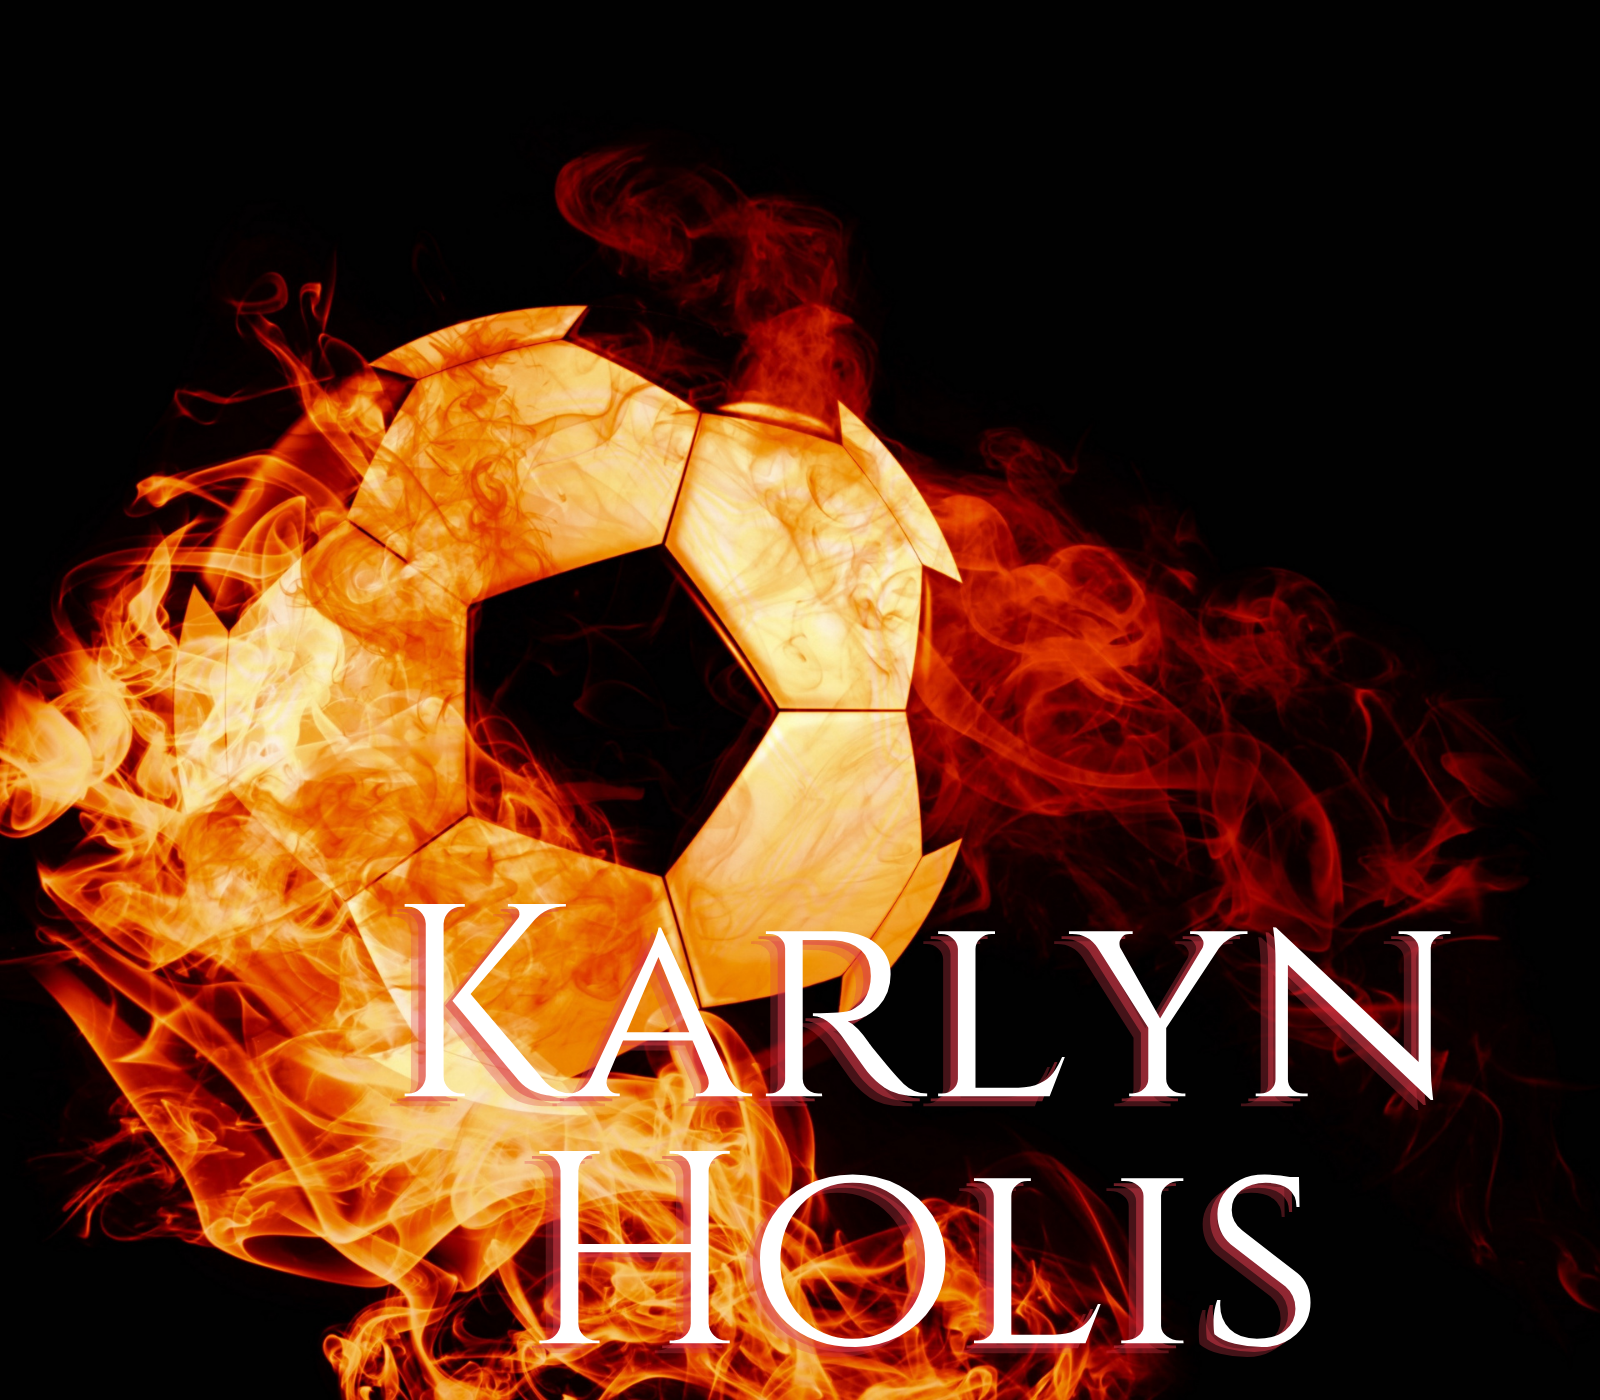 KarlynHolis name image: 1